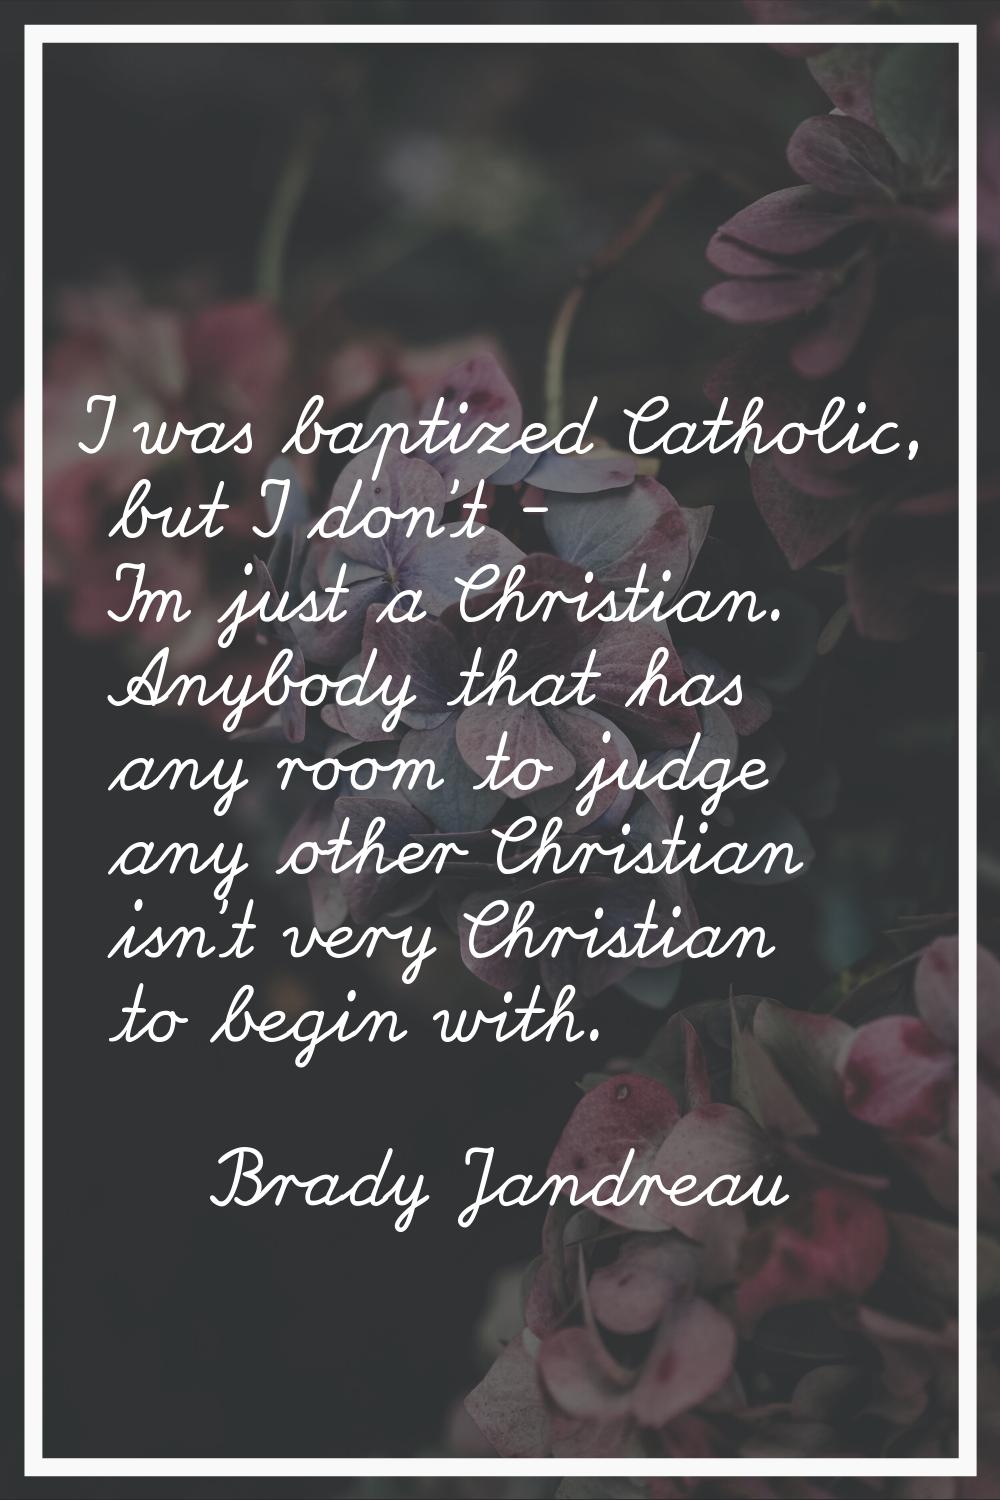 I was baptized Catholic, but I don't - I'm just a Christian. Anybody that has any room to judge any